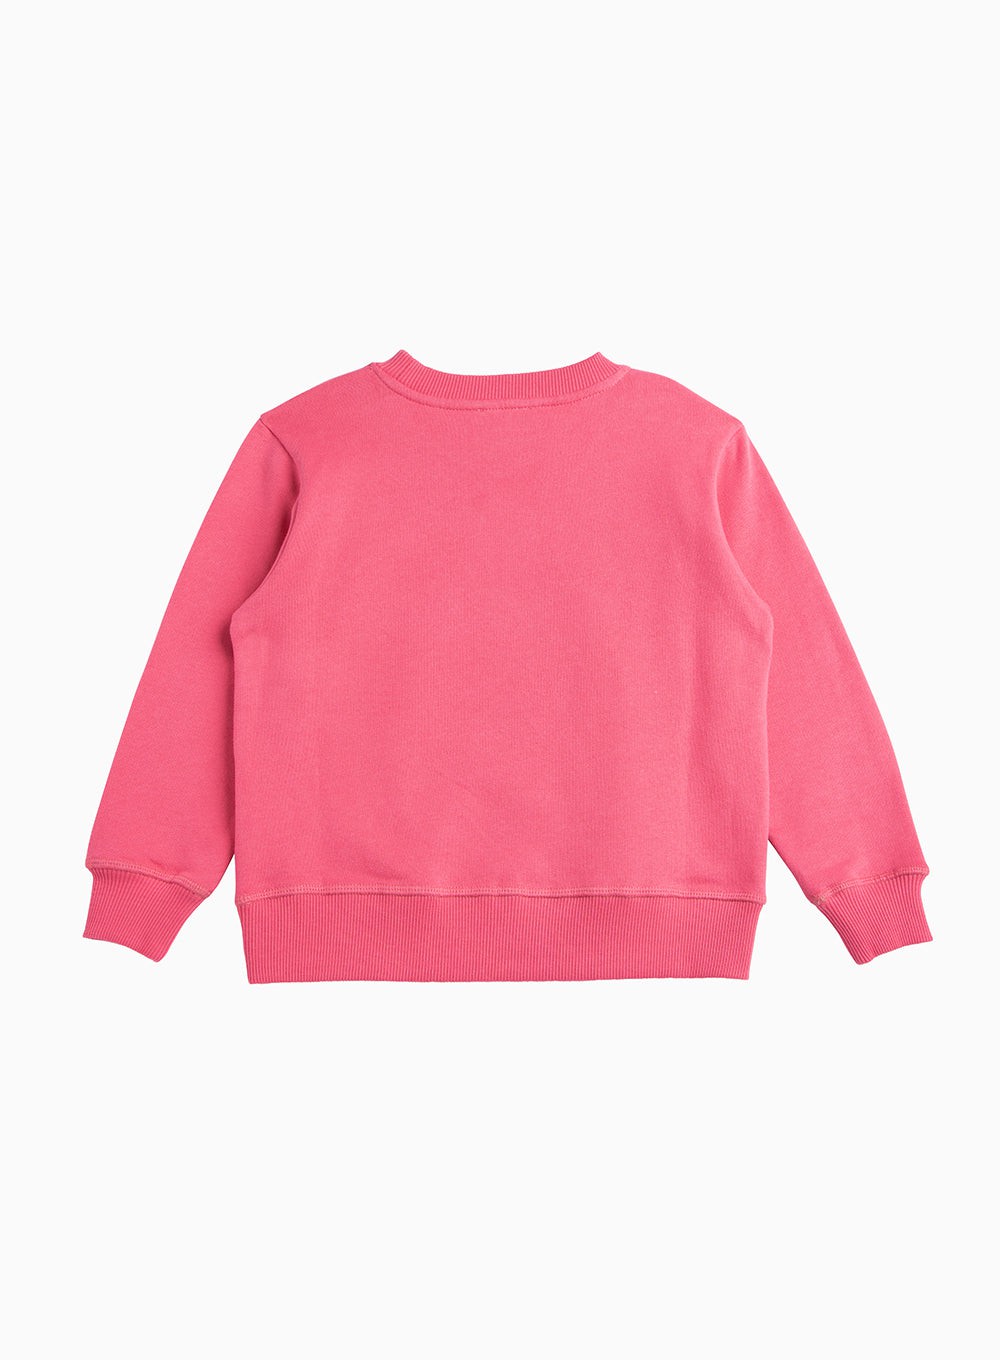 Lily Rose Sweatshirt Florence May Sweatshirt